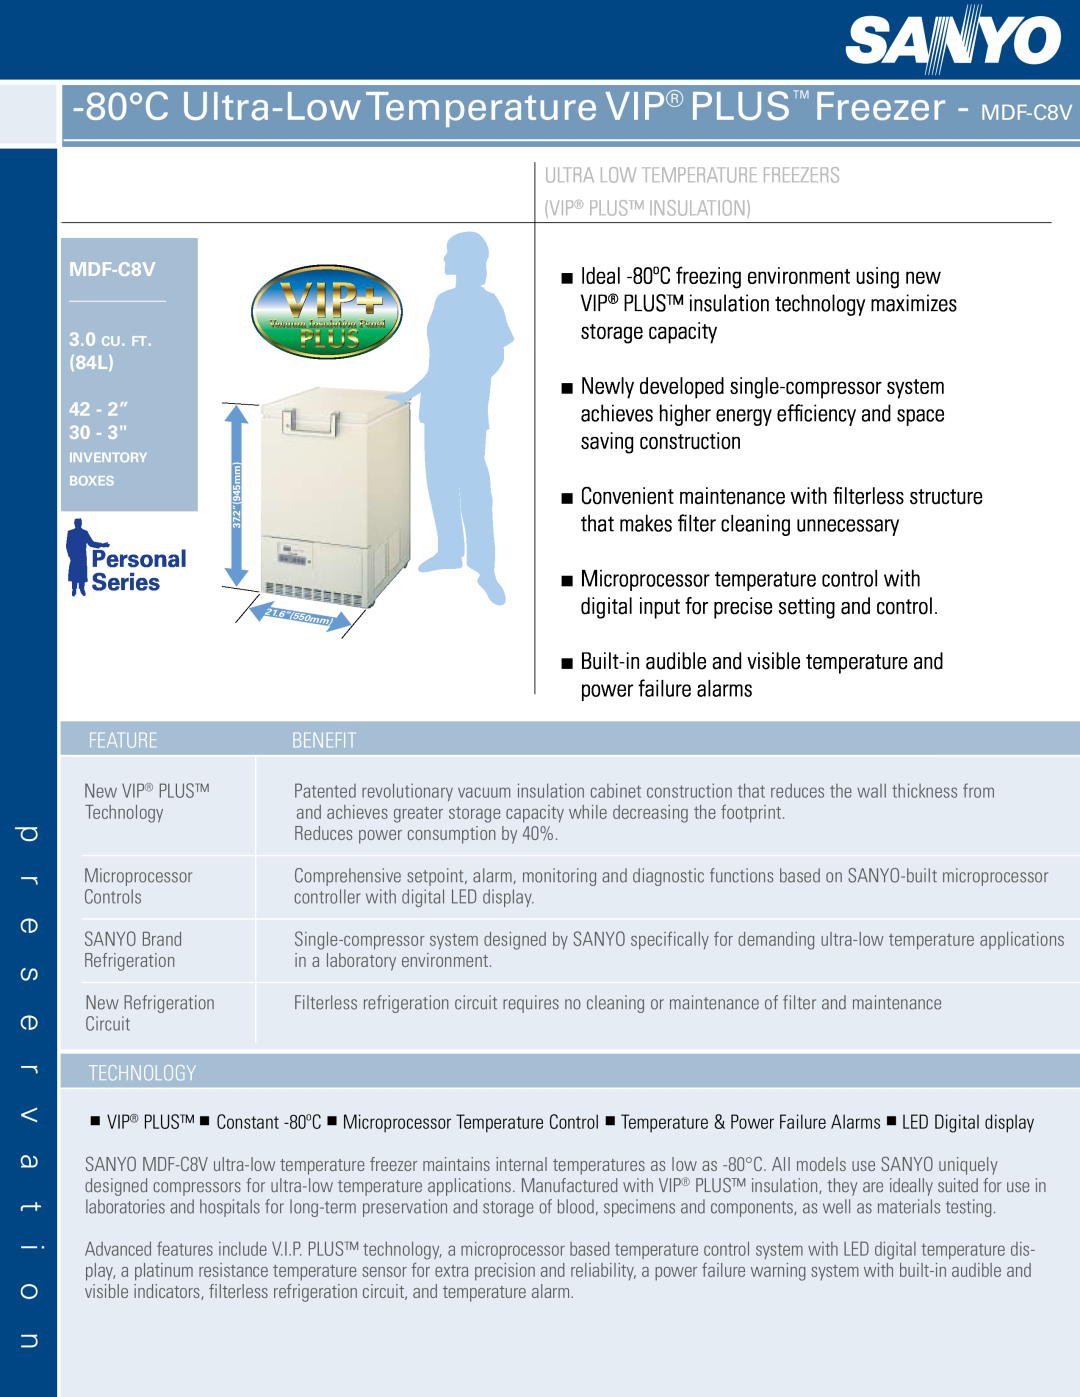 Sanyo MDF-C8V service manual Service Manual, Ultra-LowTemperature Freezer, SANYO Electric Co., Ltd, FILE No 